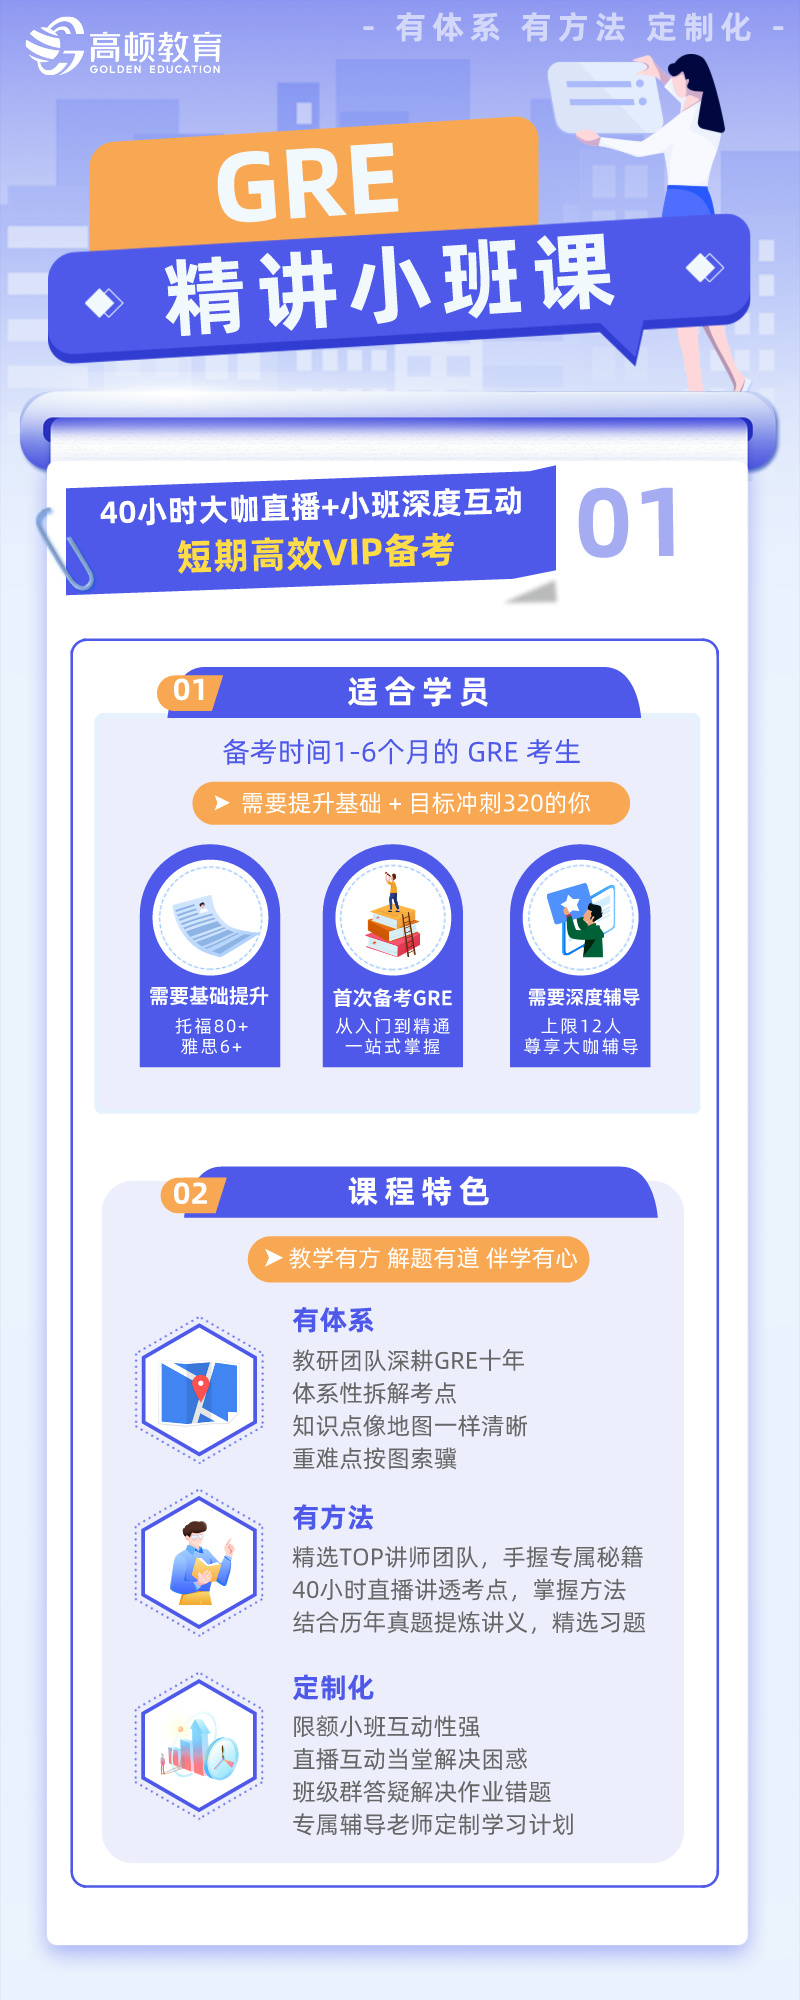 https://simg01.gaodunwangxiao.com/uploadfiles/product-center/202404/07/1b9a5_20240407131320.jpg